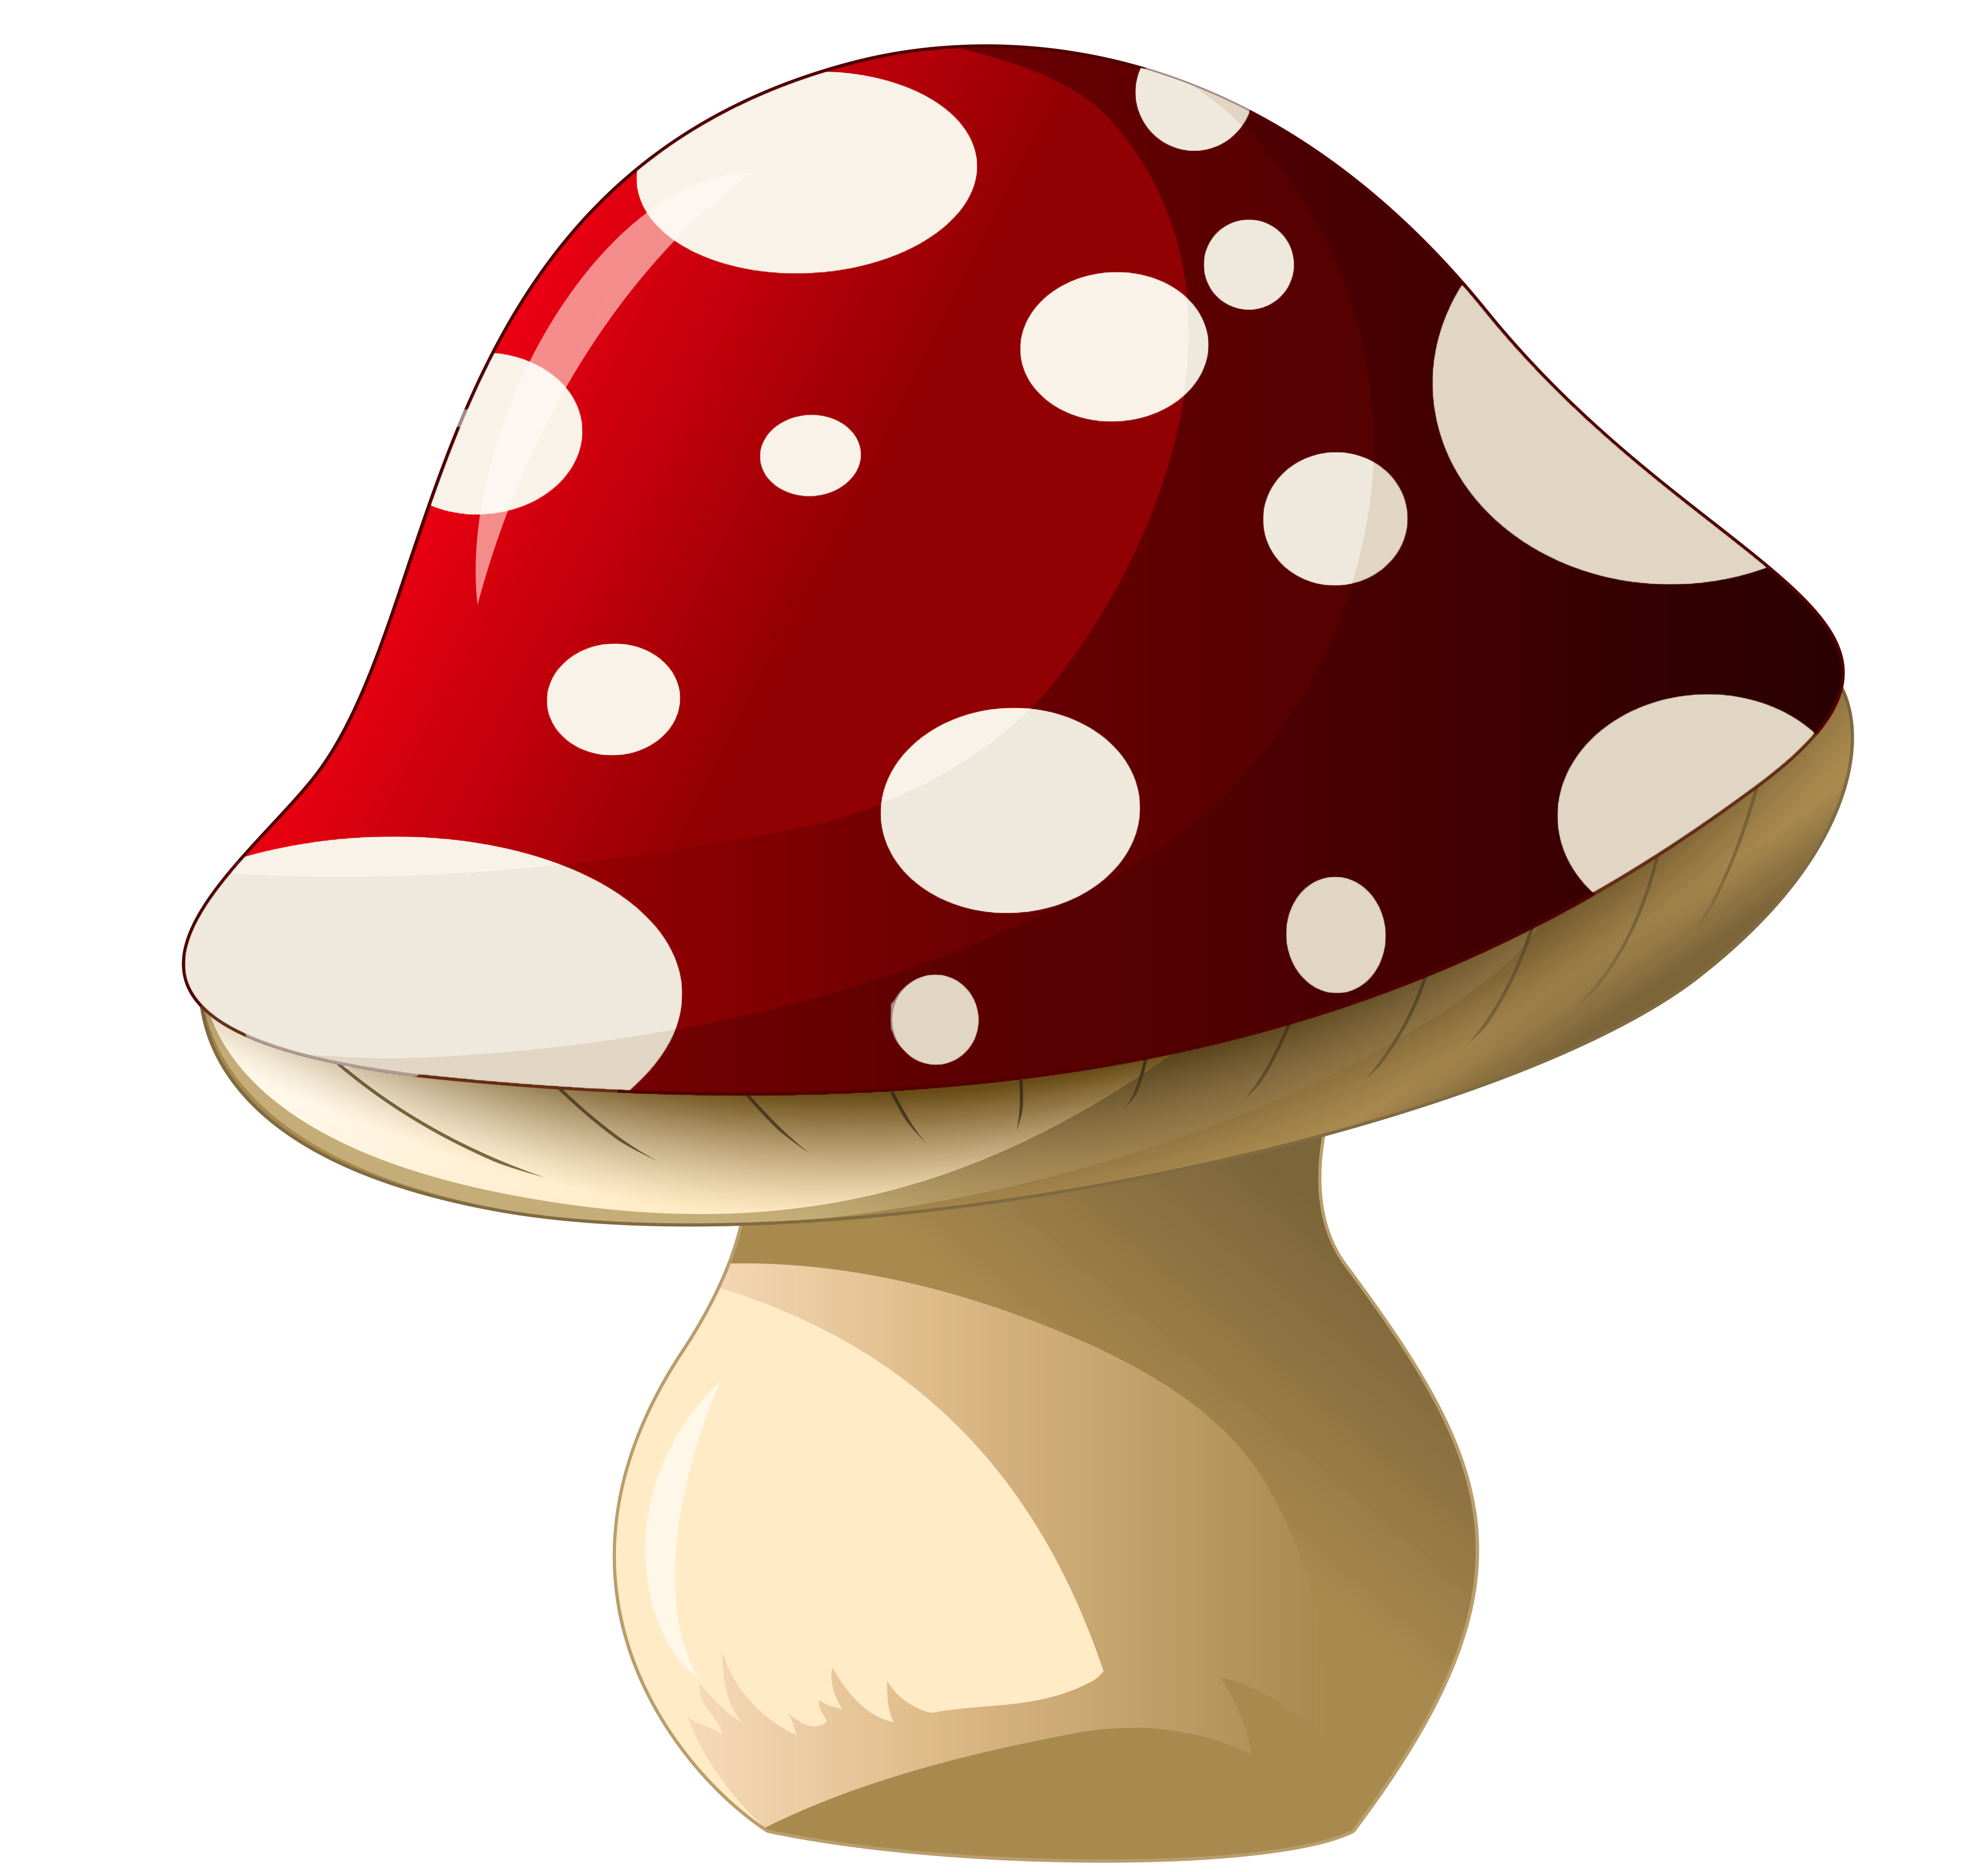 mushrooms clipart fungus